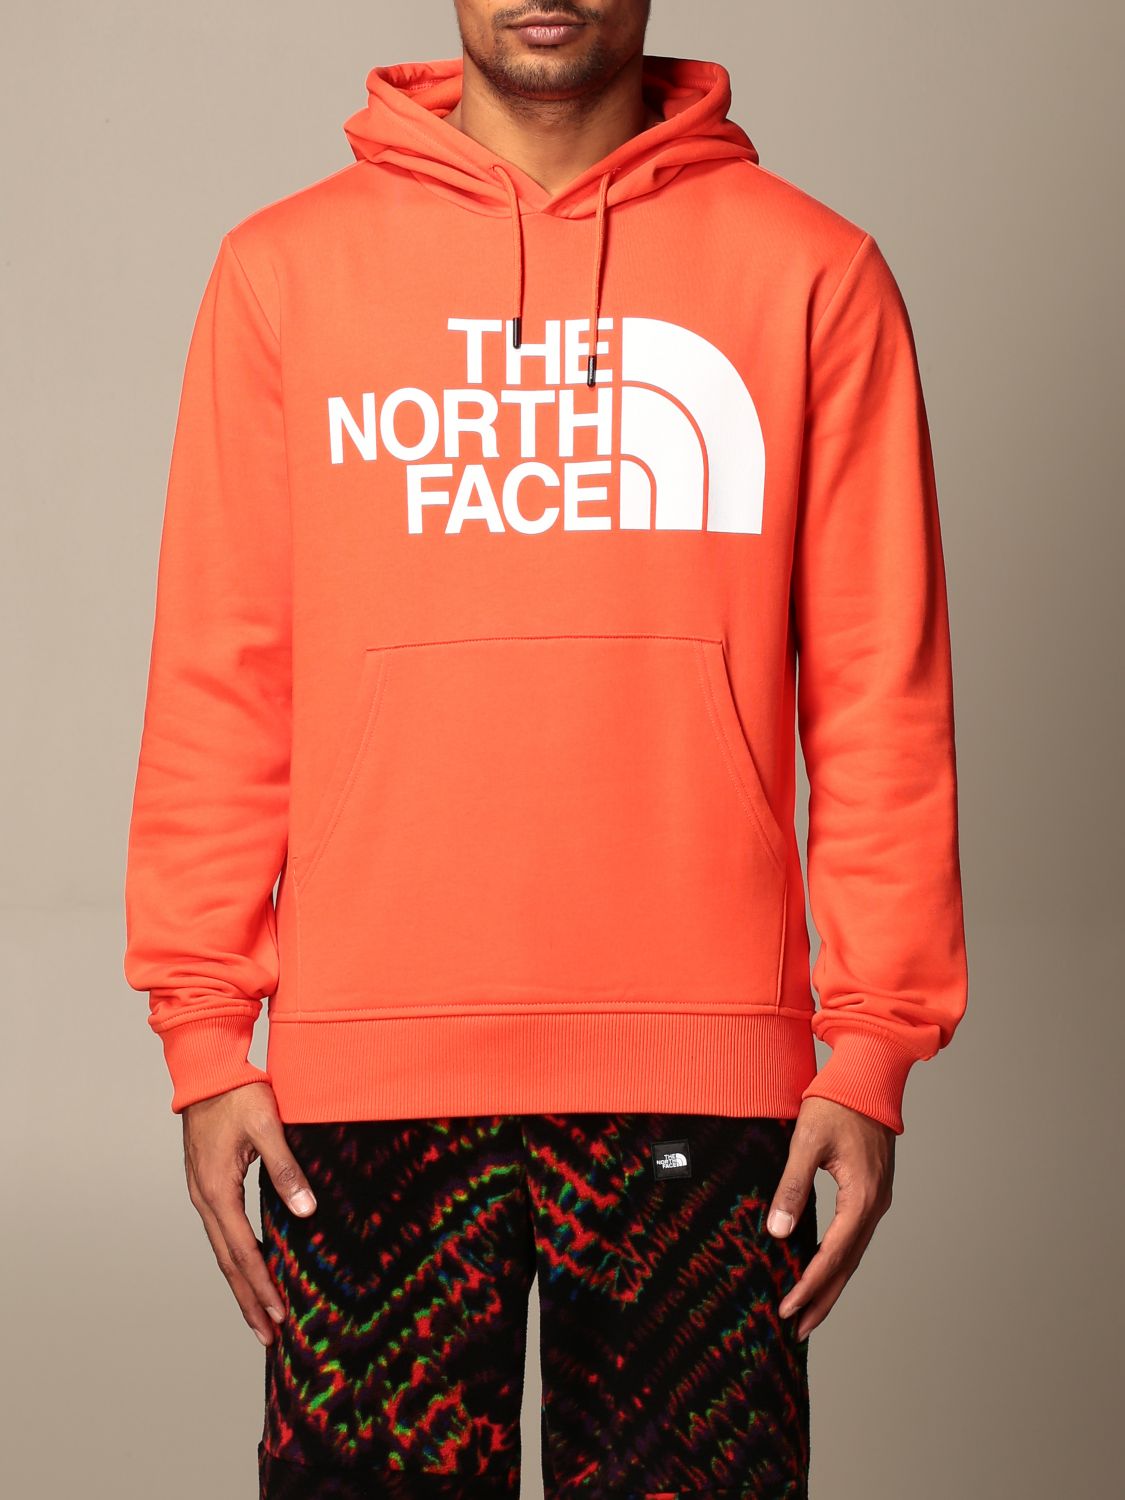 north face orange sweatshirt